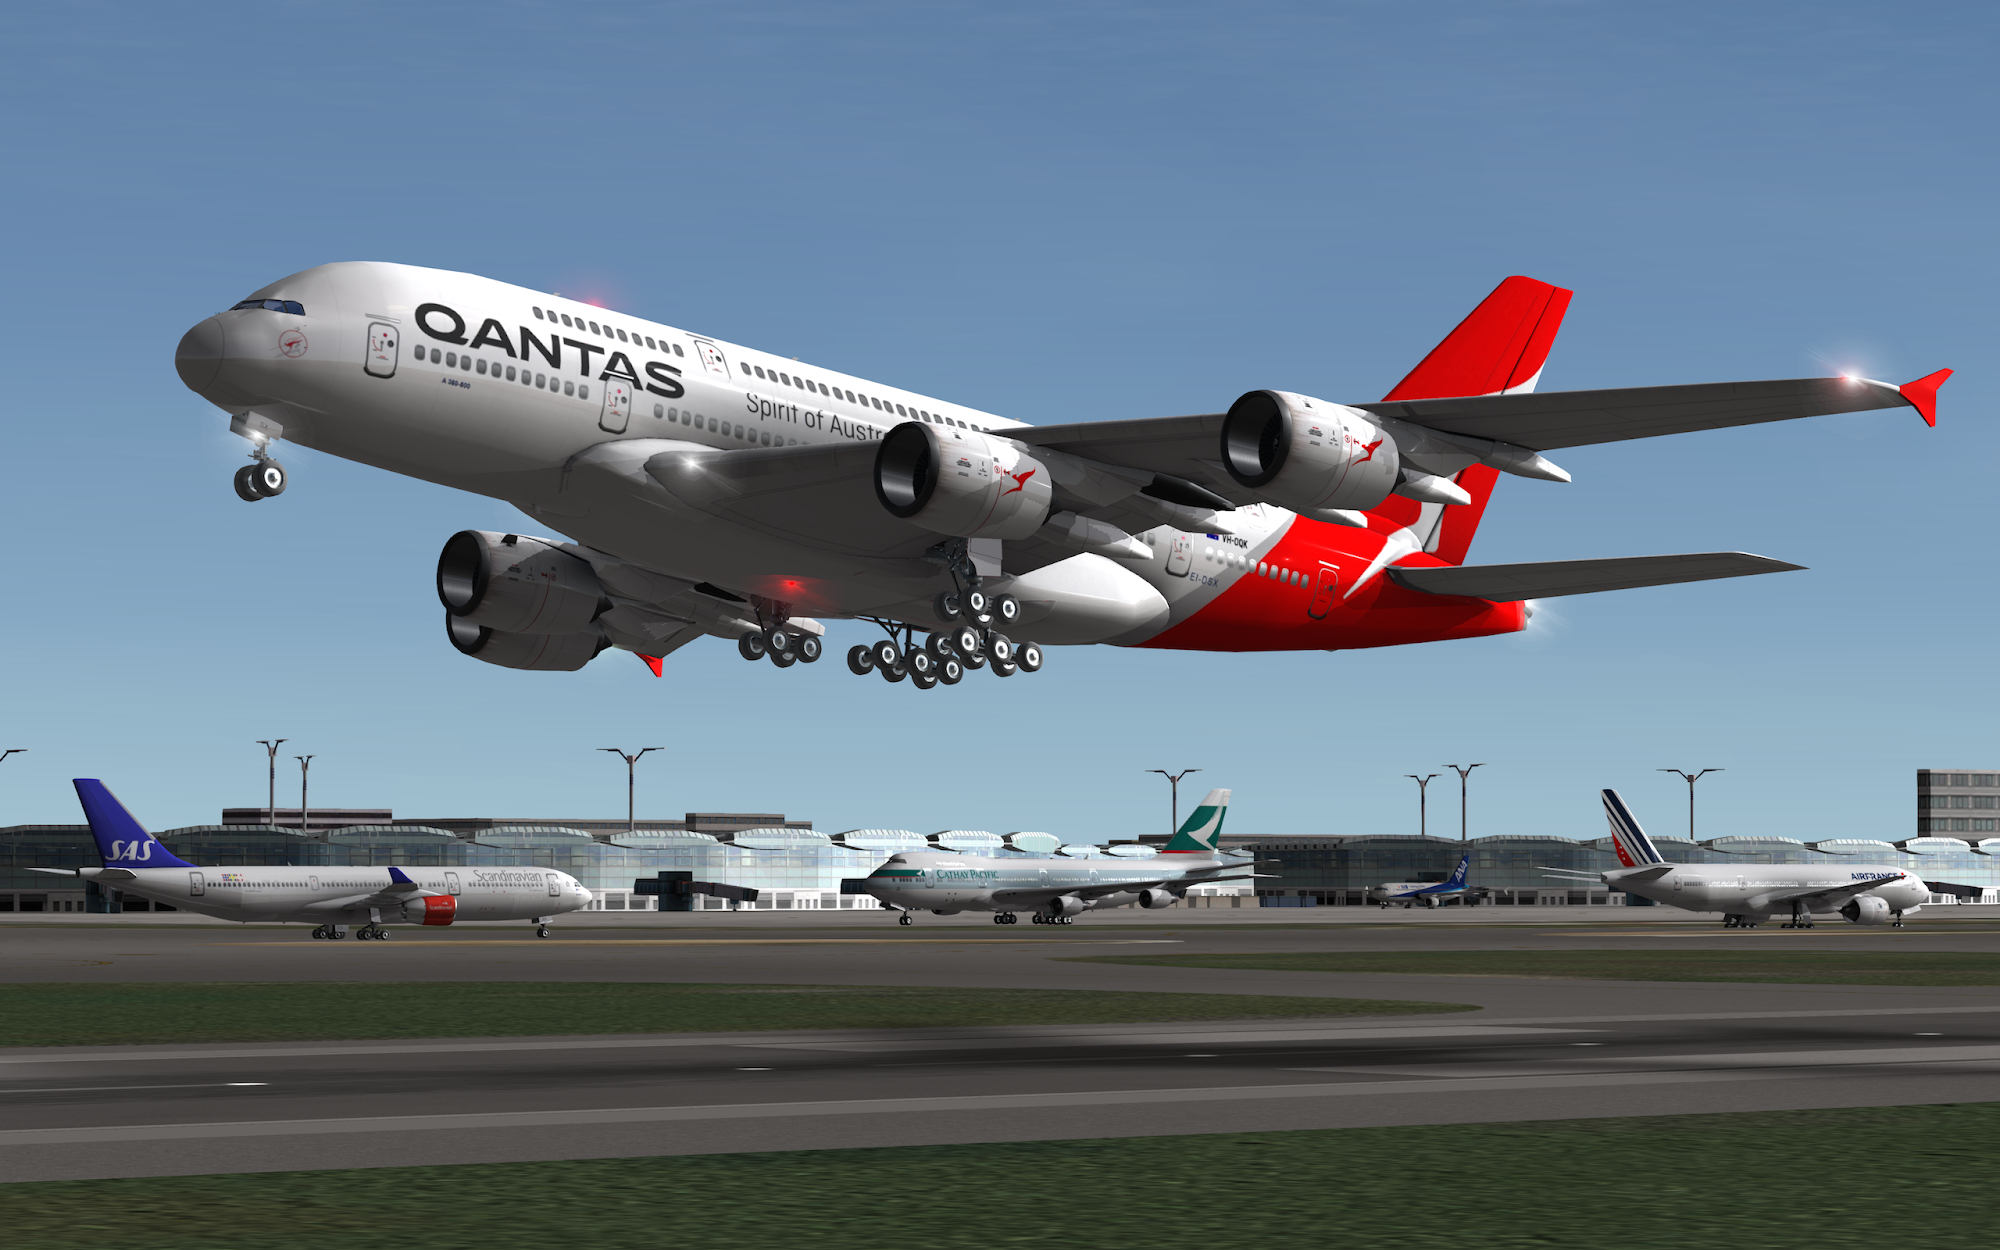 RFS - Real Flight Simulator screenshot 1